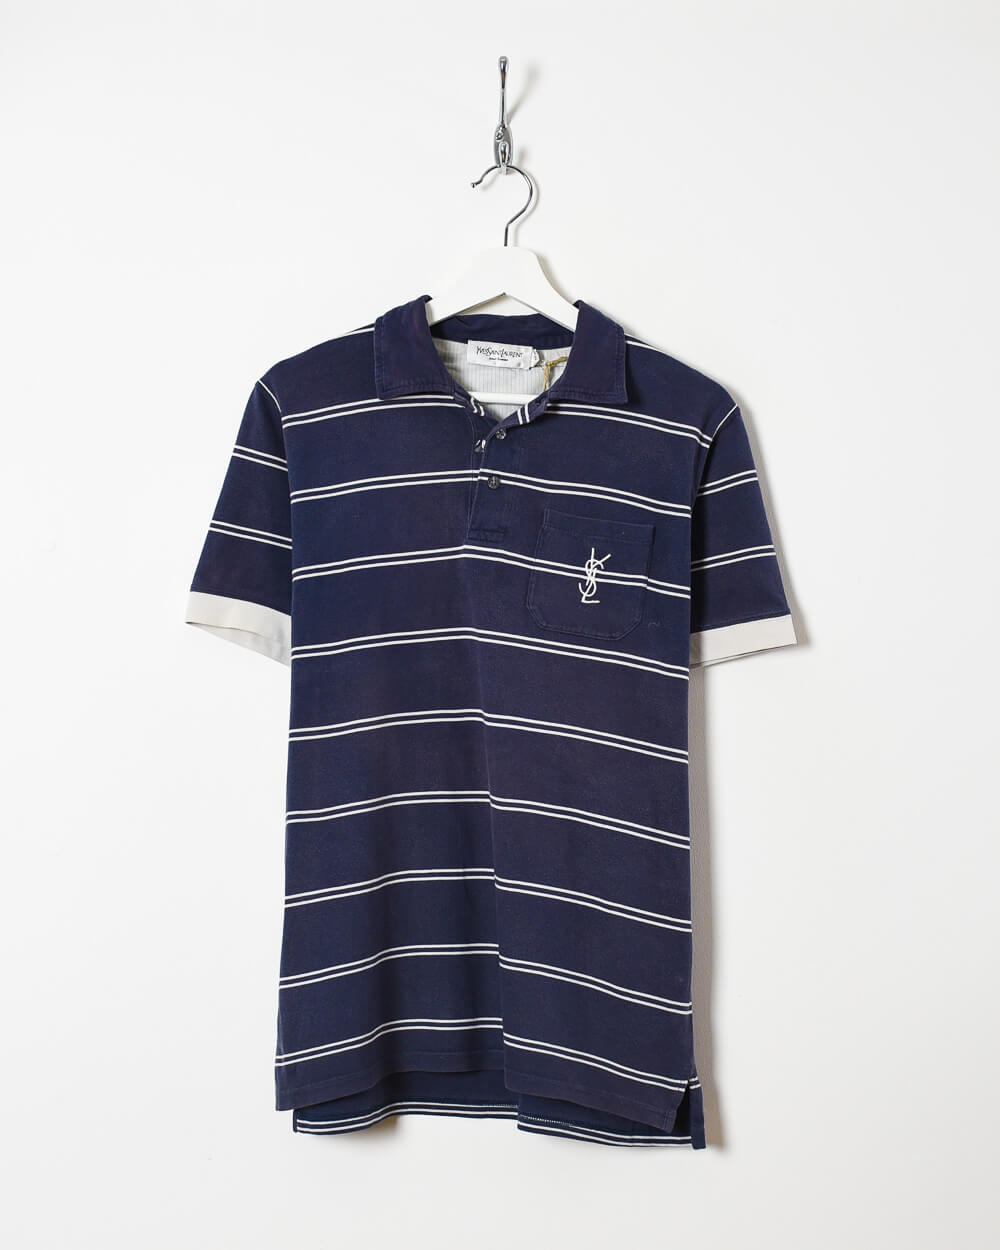 Navy Yves Saint Laurent Polo Shirt - Small